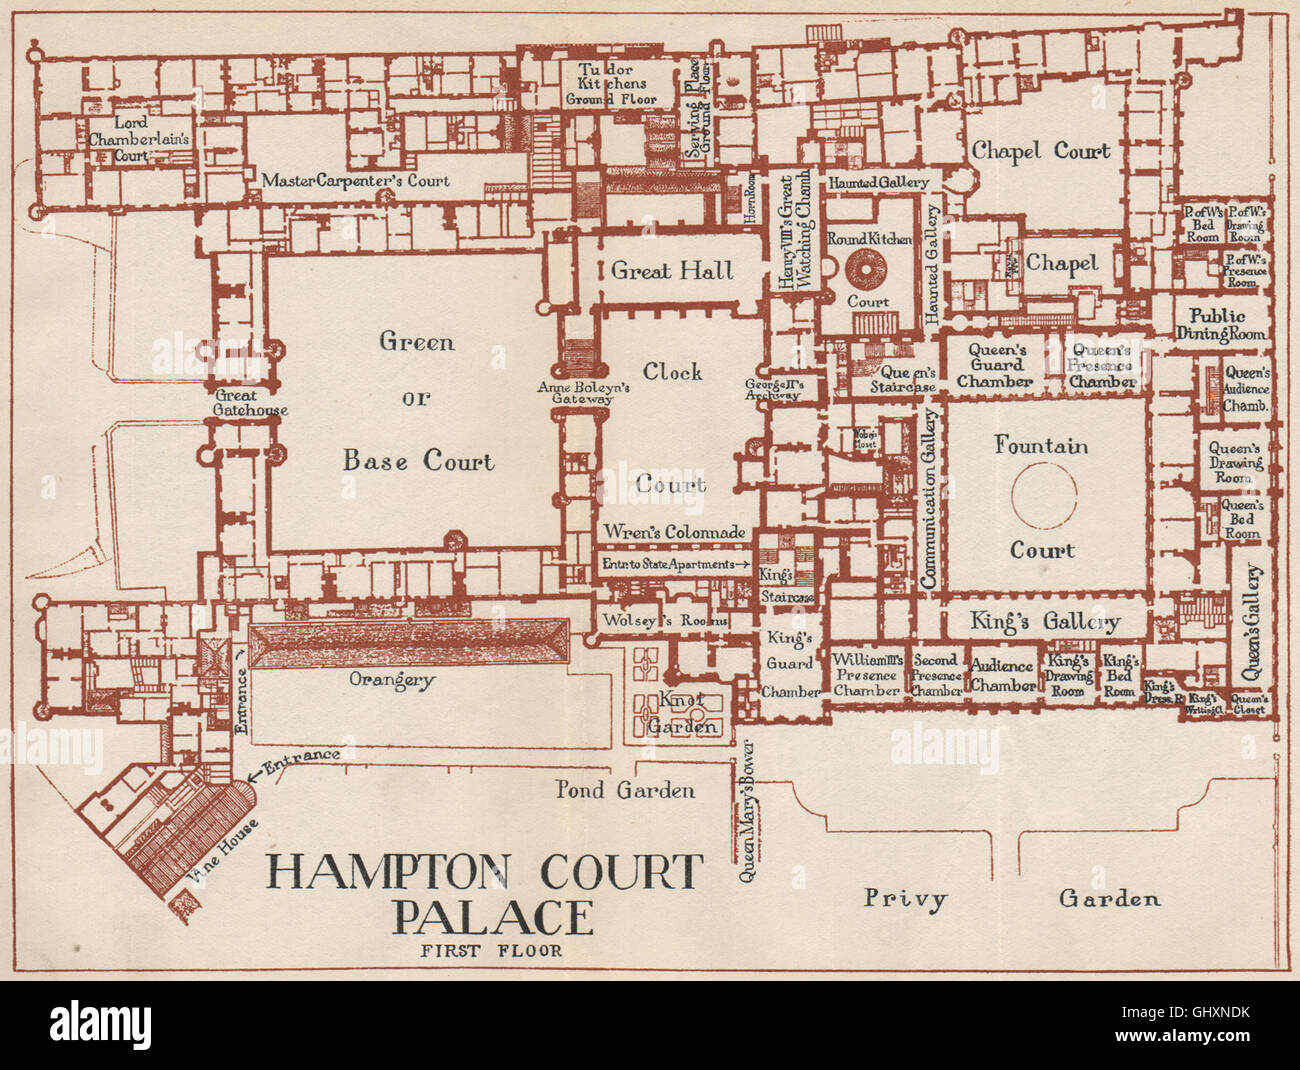 HAMPTON COURT PALACE. Vintage plan. First floor. London